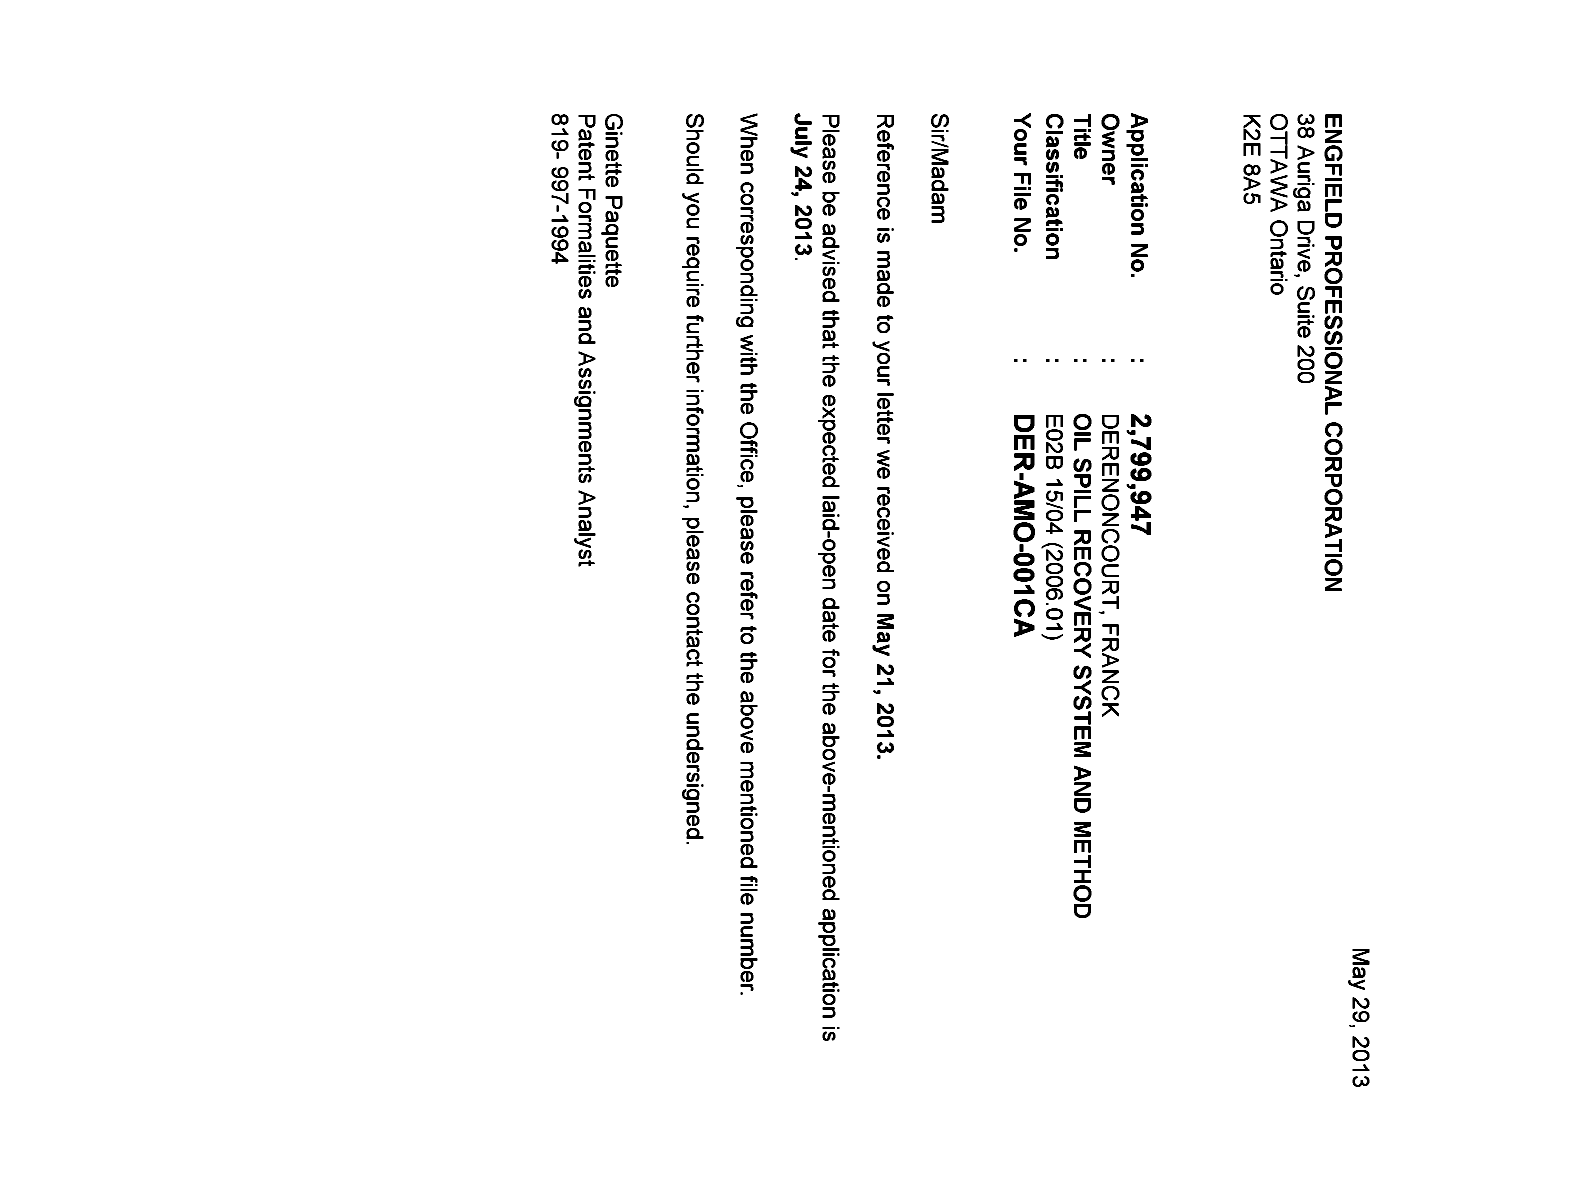 Canadian Patent Document 2799947. Correspondence 20121229. Image 1 of 1